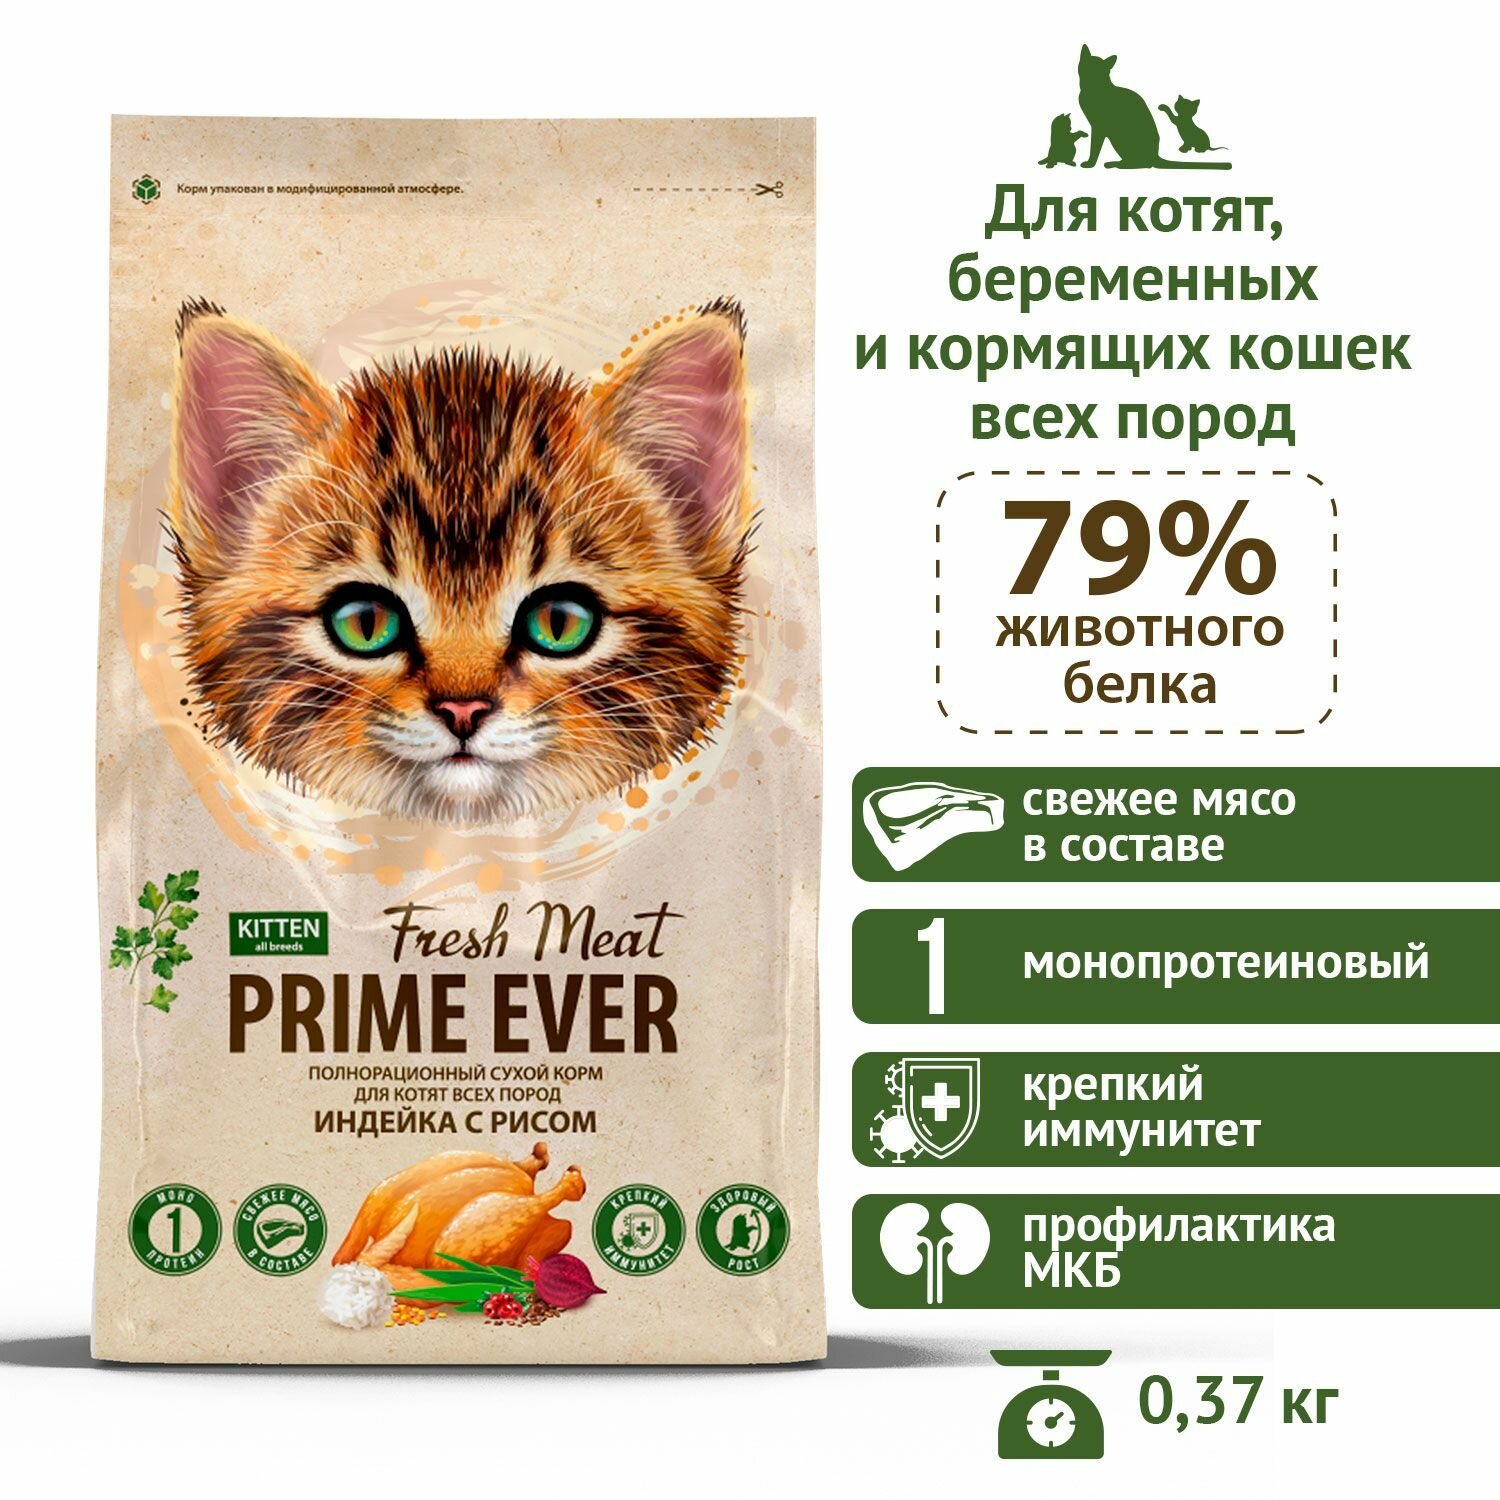 Сухой корм для котят всех пород индейка с рисом Prime Ever Fresh Meat Kitten, 370 г